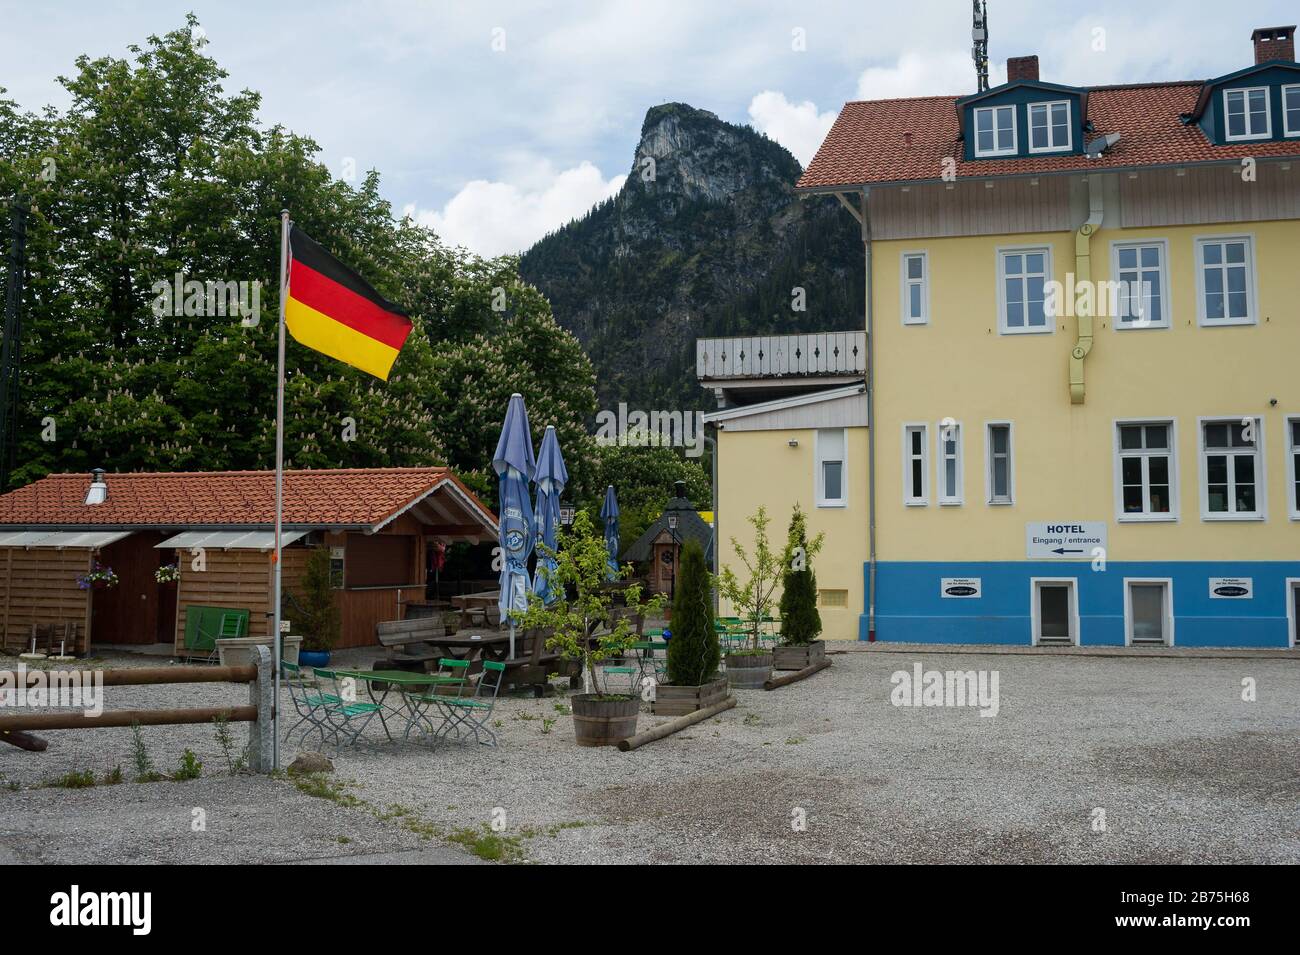 31 05 2016 Oberammergau Bavaria Germany Europe View Of A